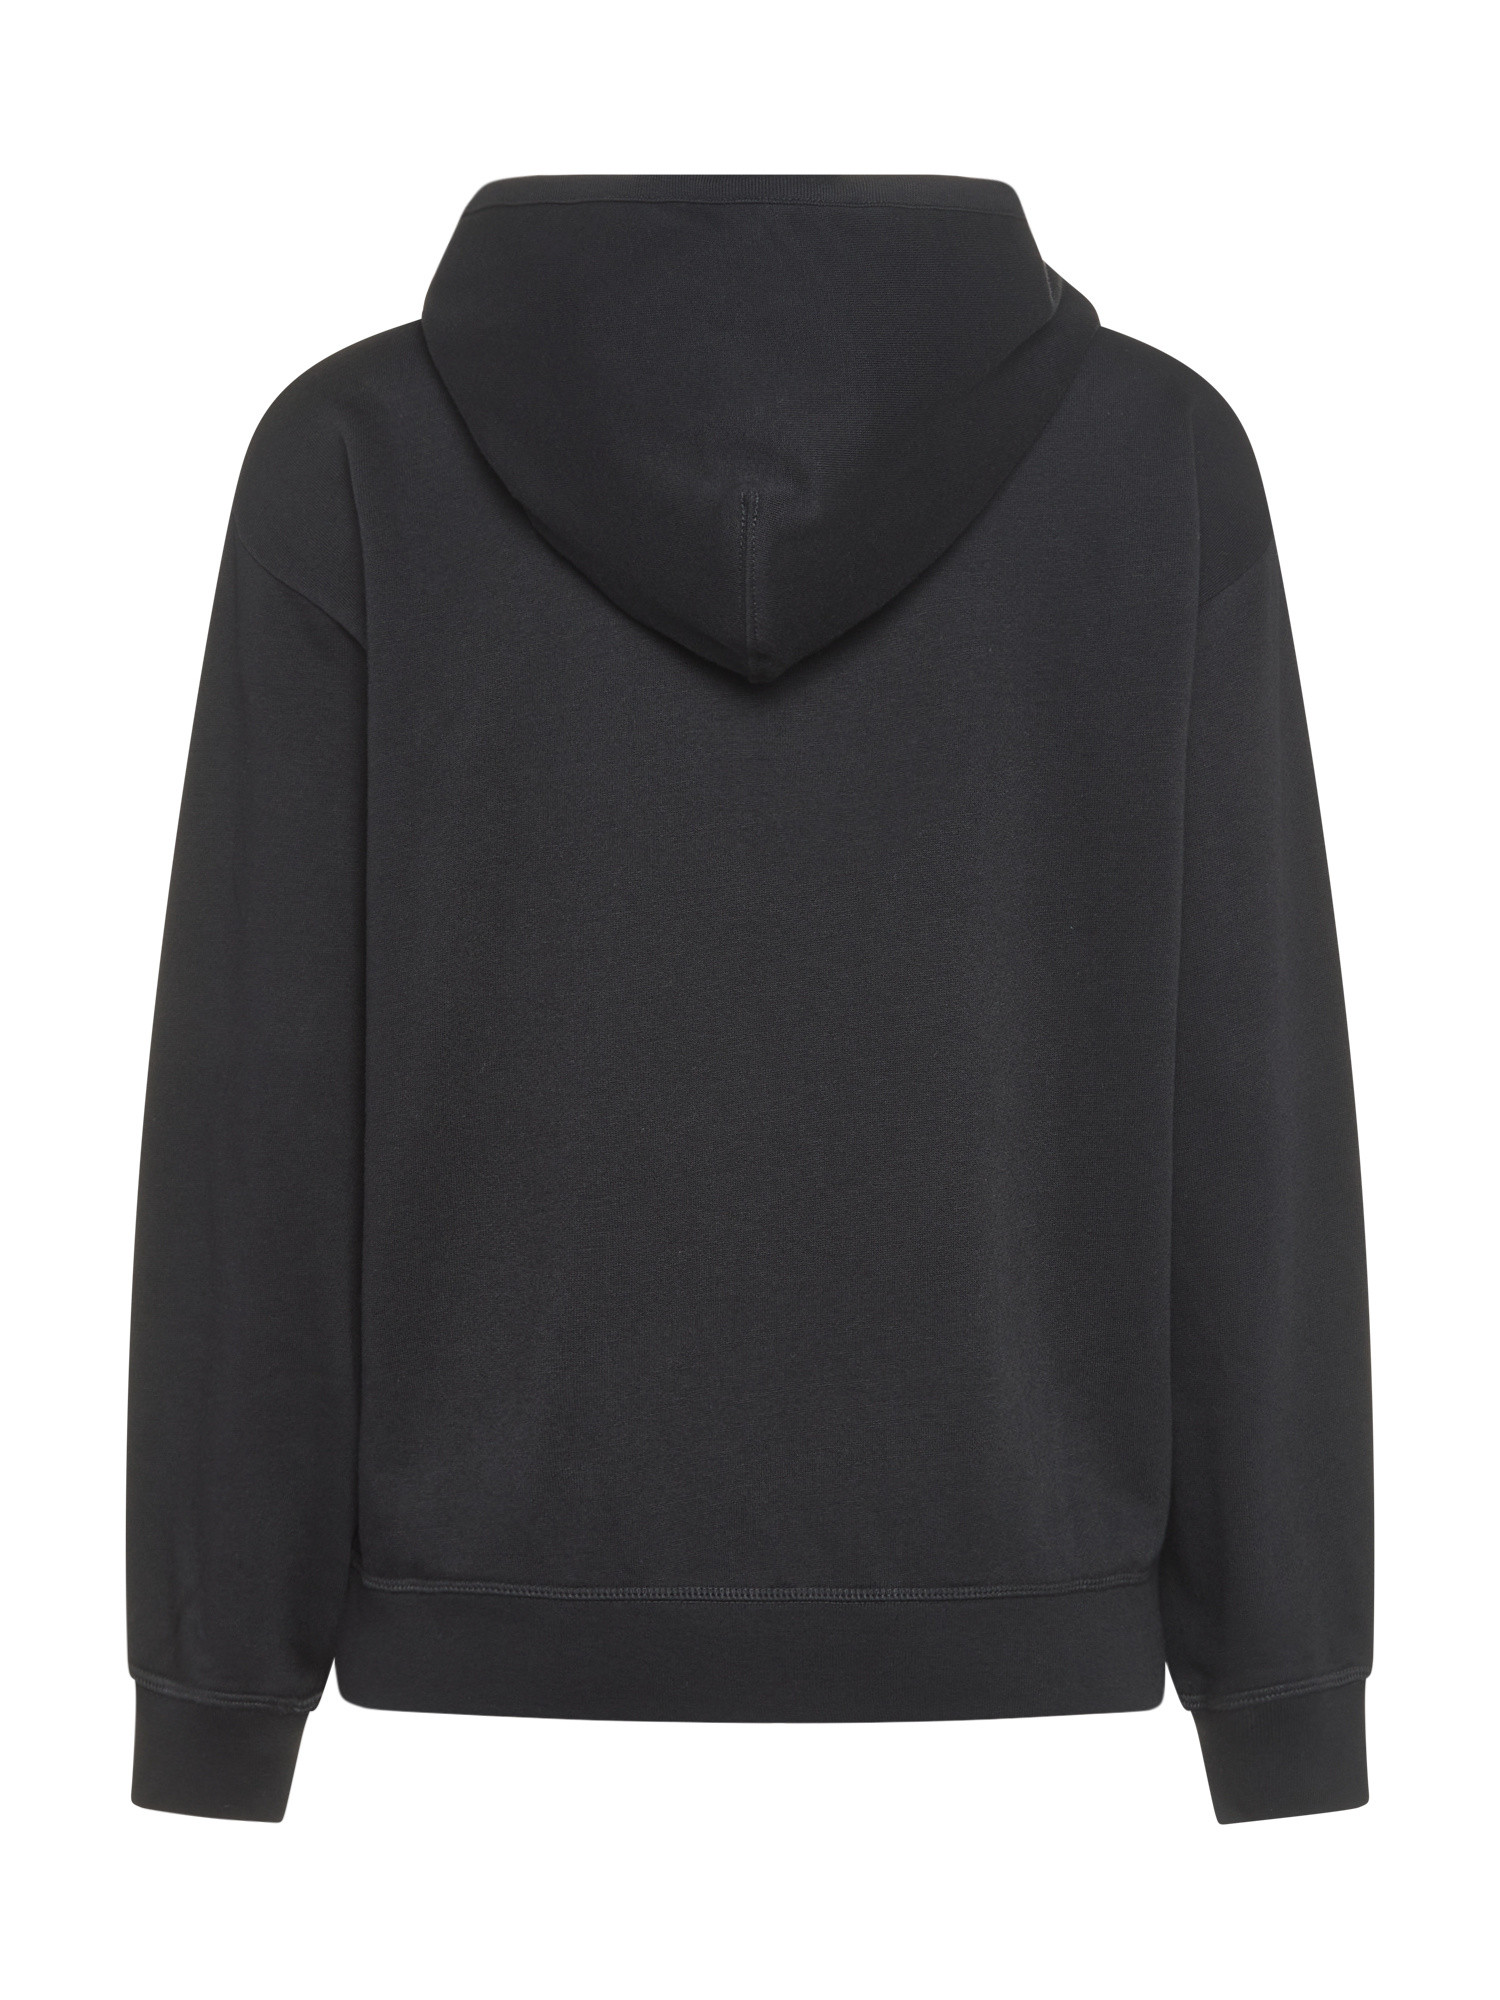 Sweatshirt with zip and hood, Black, large image number 1